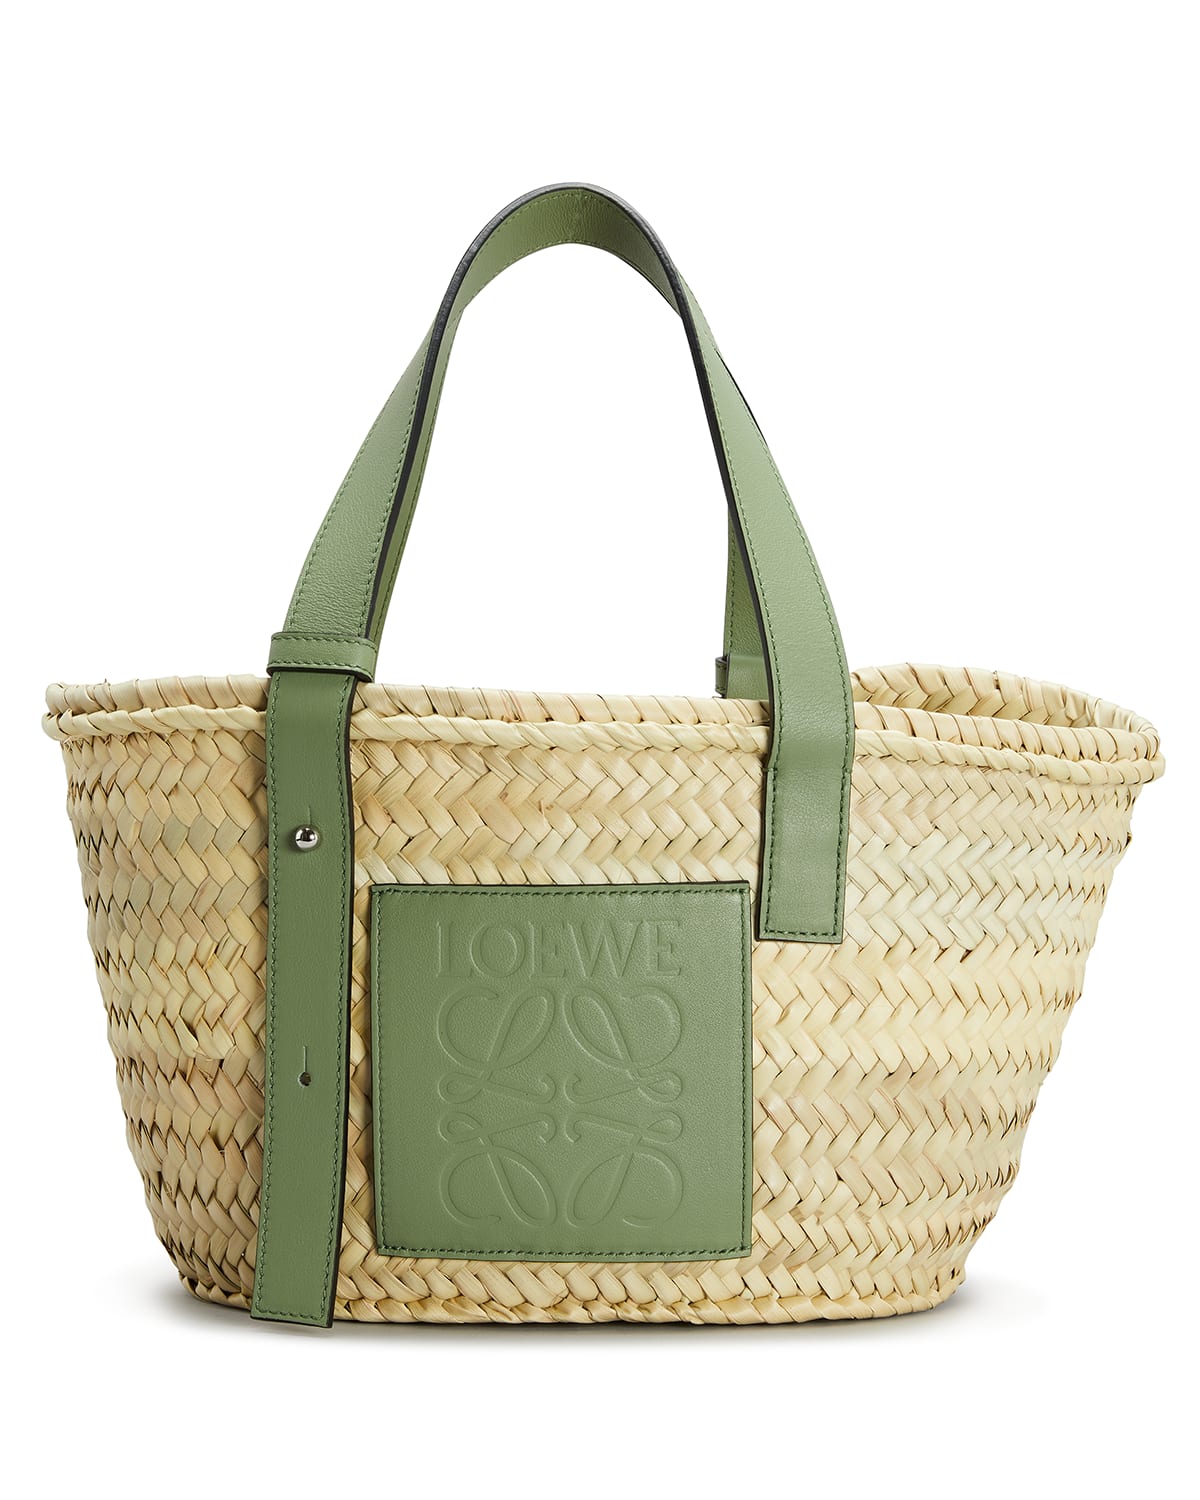 Loewe x Paula's Ibiza Basket Small Woven Palm Tote Bag